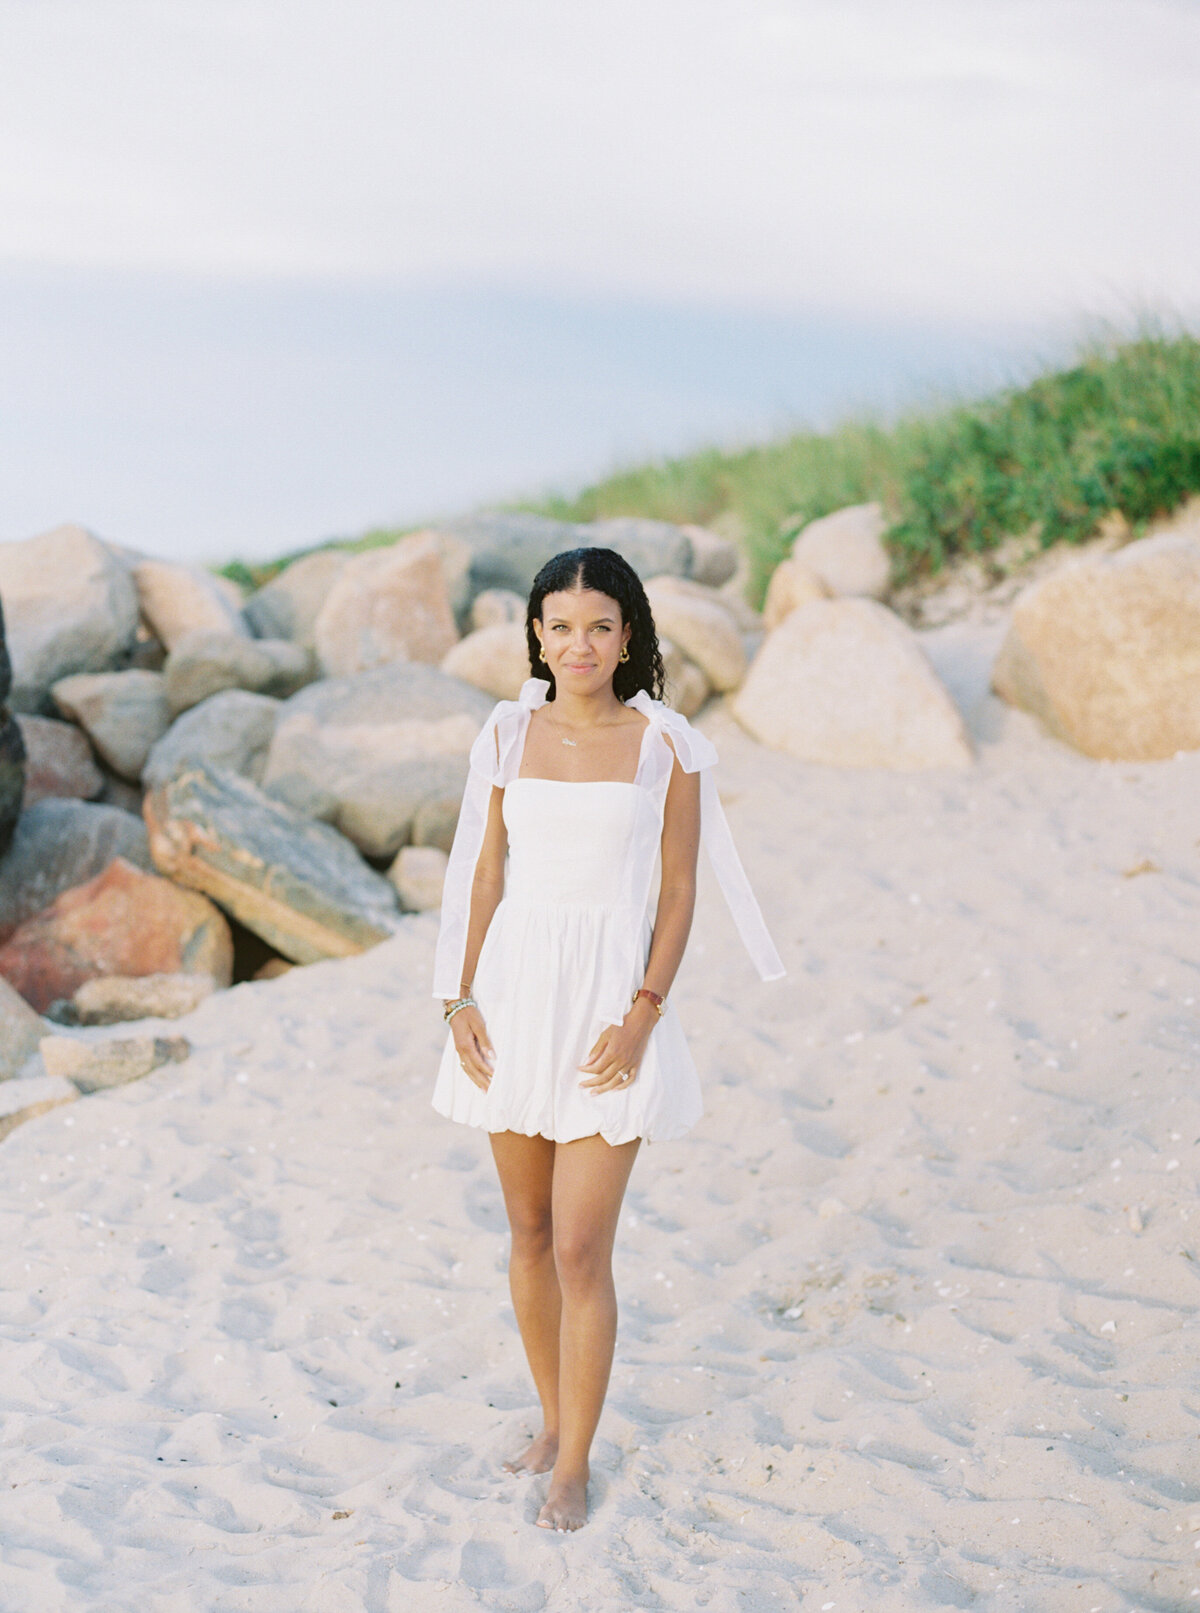 Summer Martha's Vineyard Engagement Session On The Beach | Amarachi Ikeji Photography 28